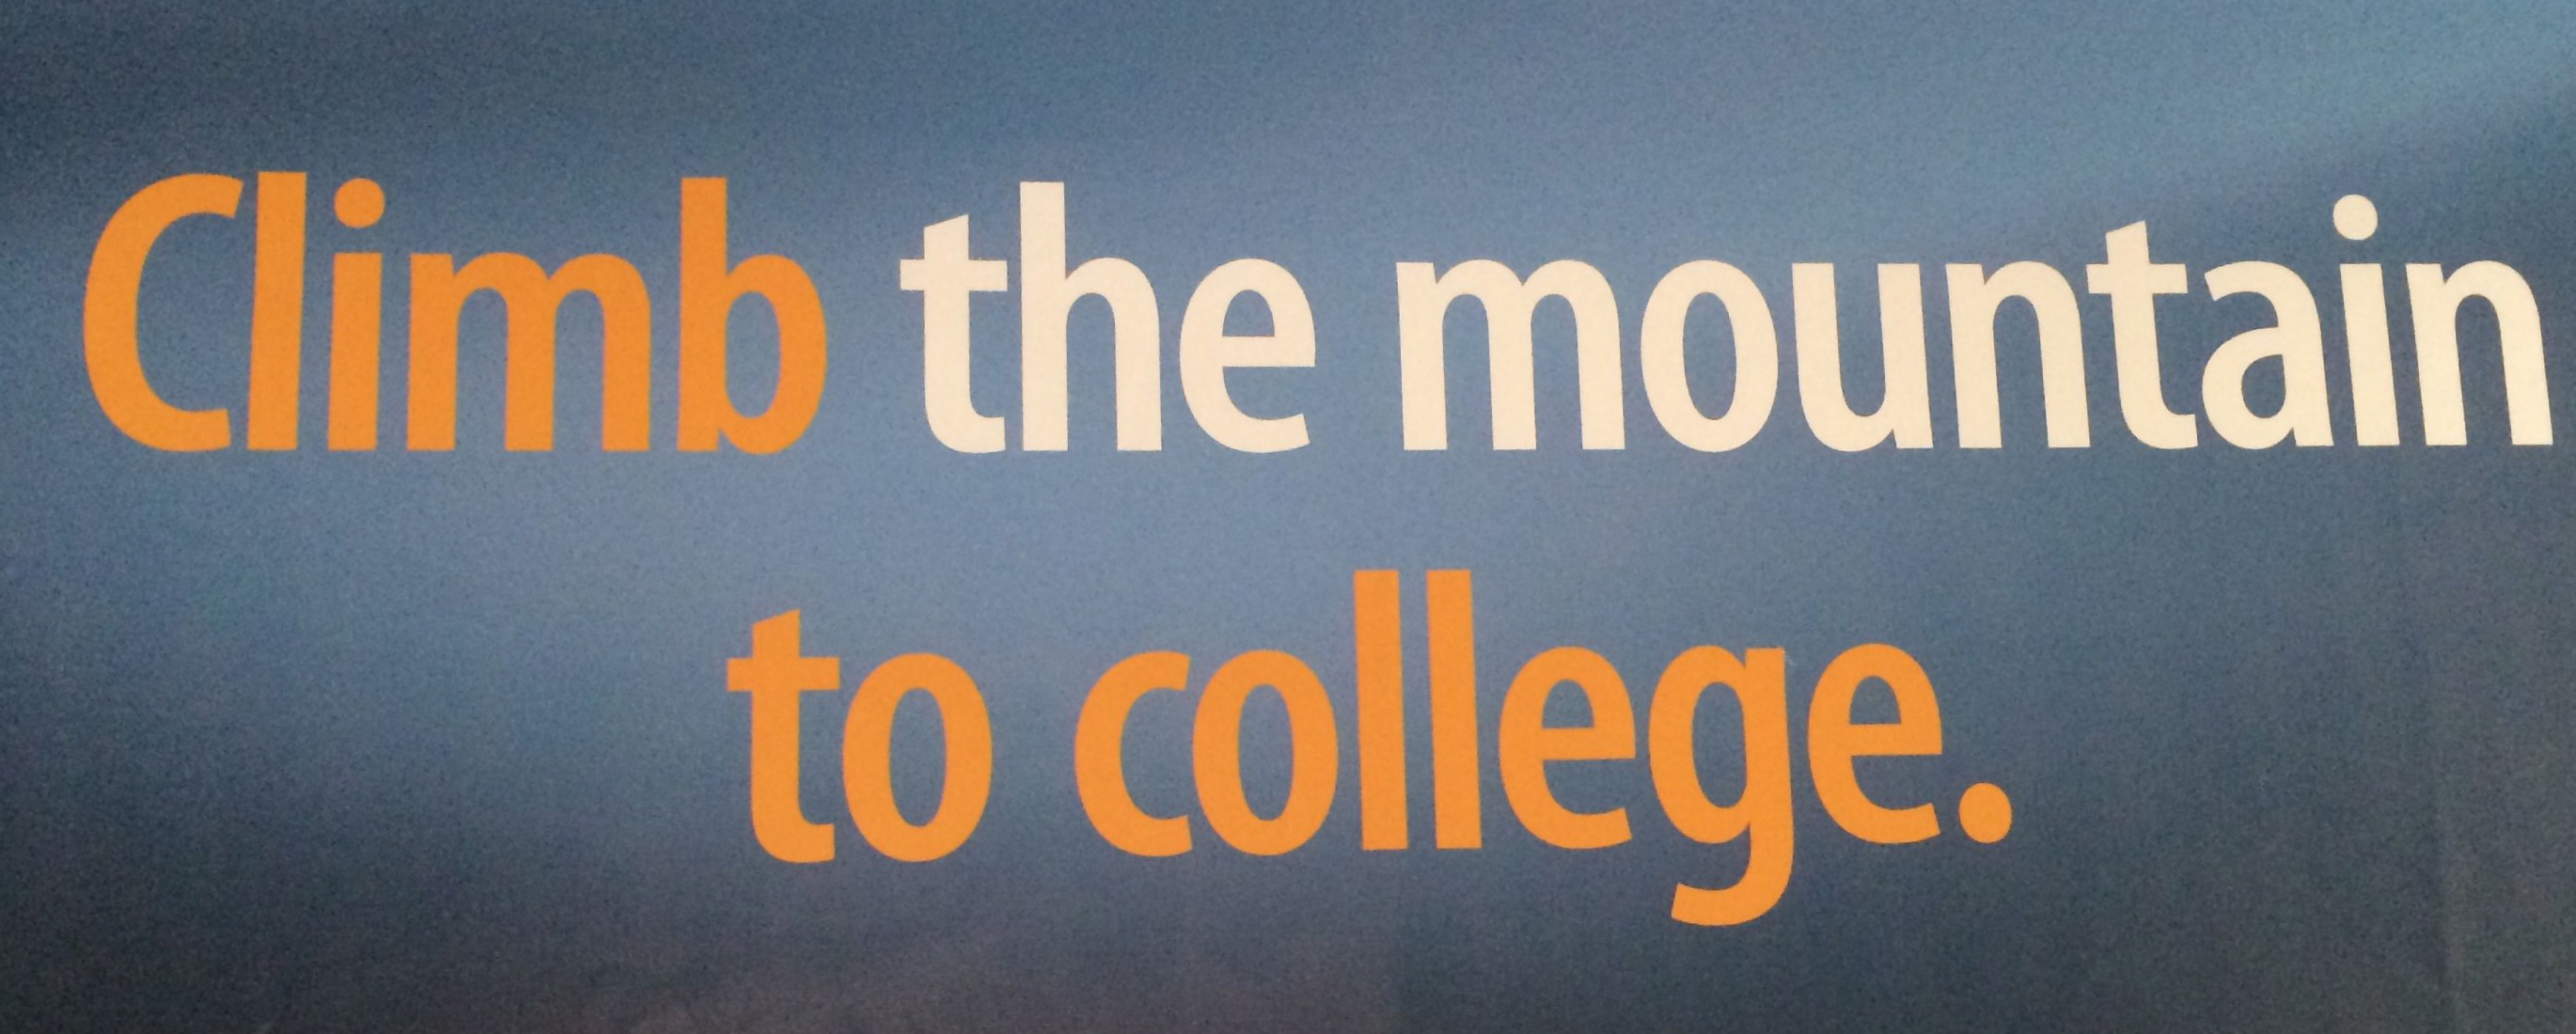 KIPP banner "Climb the mountain to college" | San Antonio Charter Moms